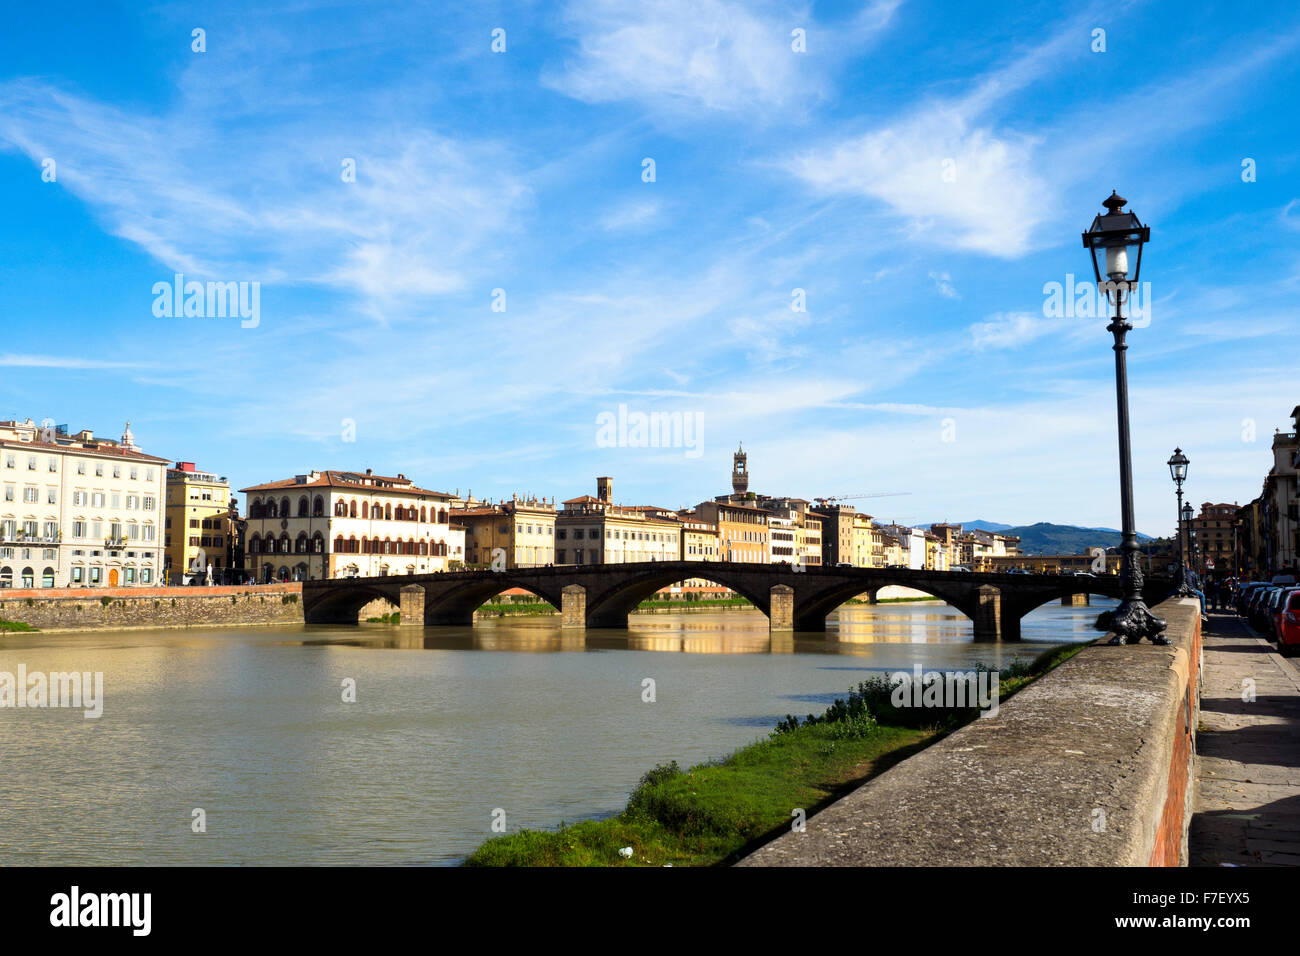 Ponte (bridge) alla Carraia - Florence, Italy Stock Photo